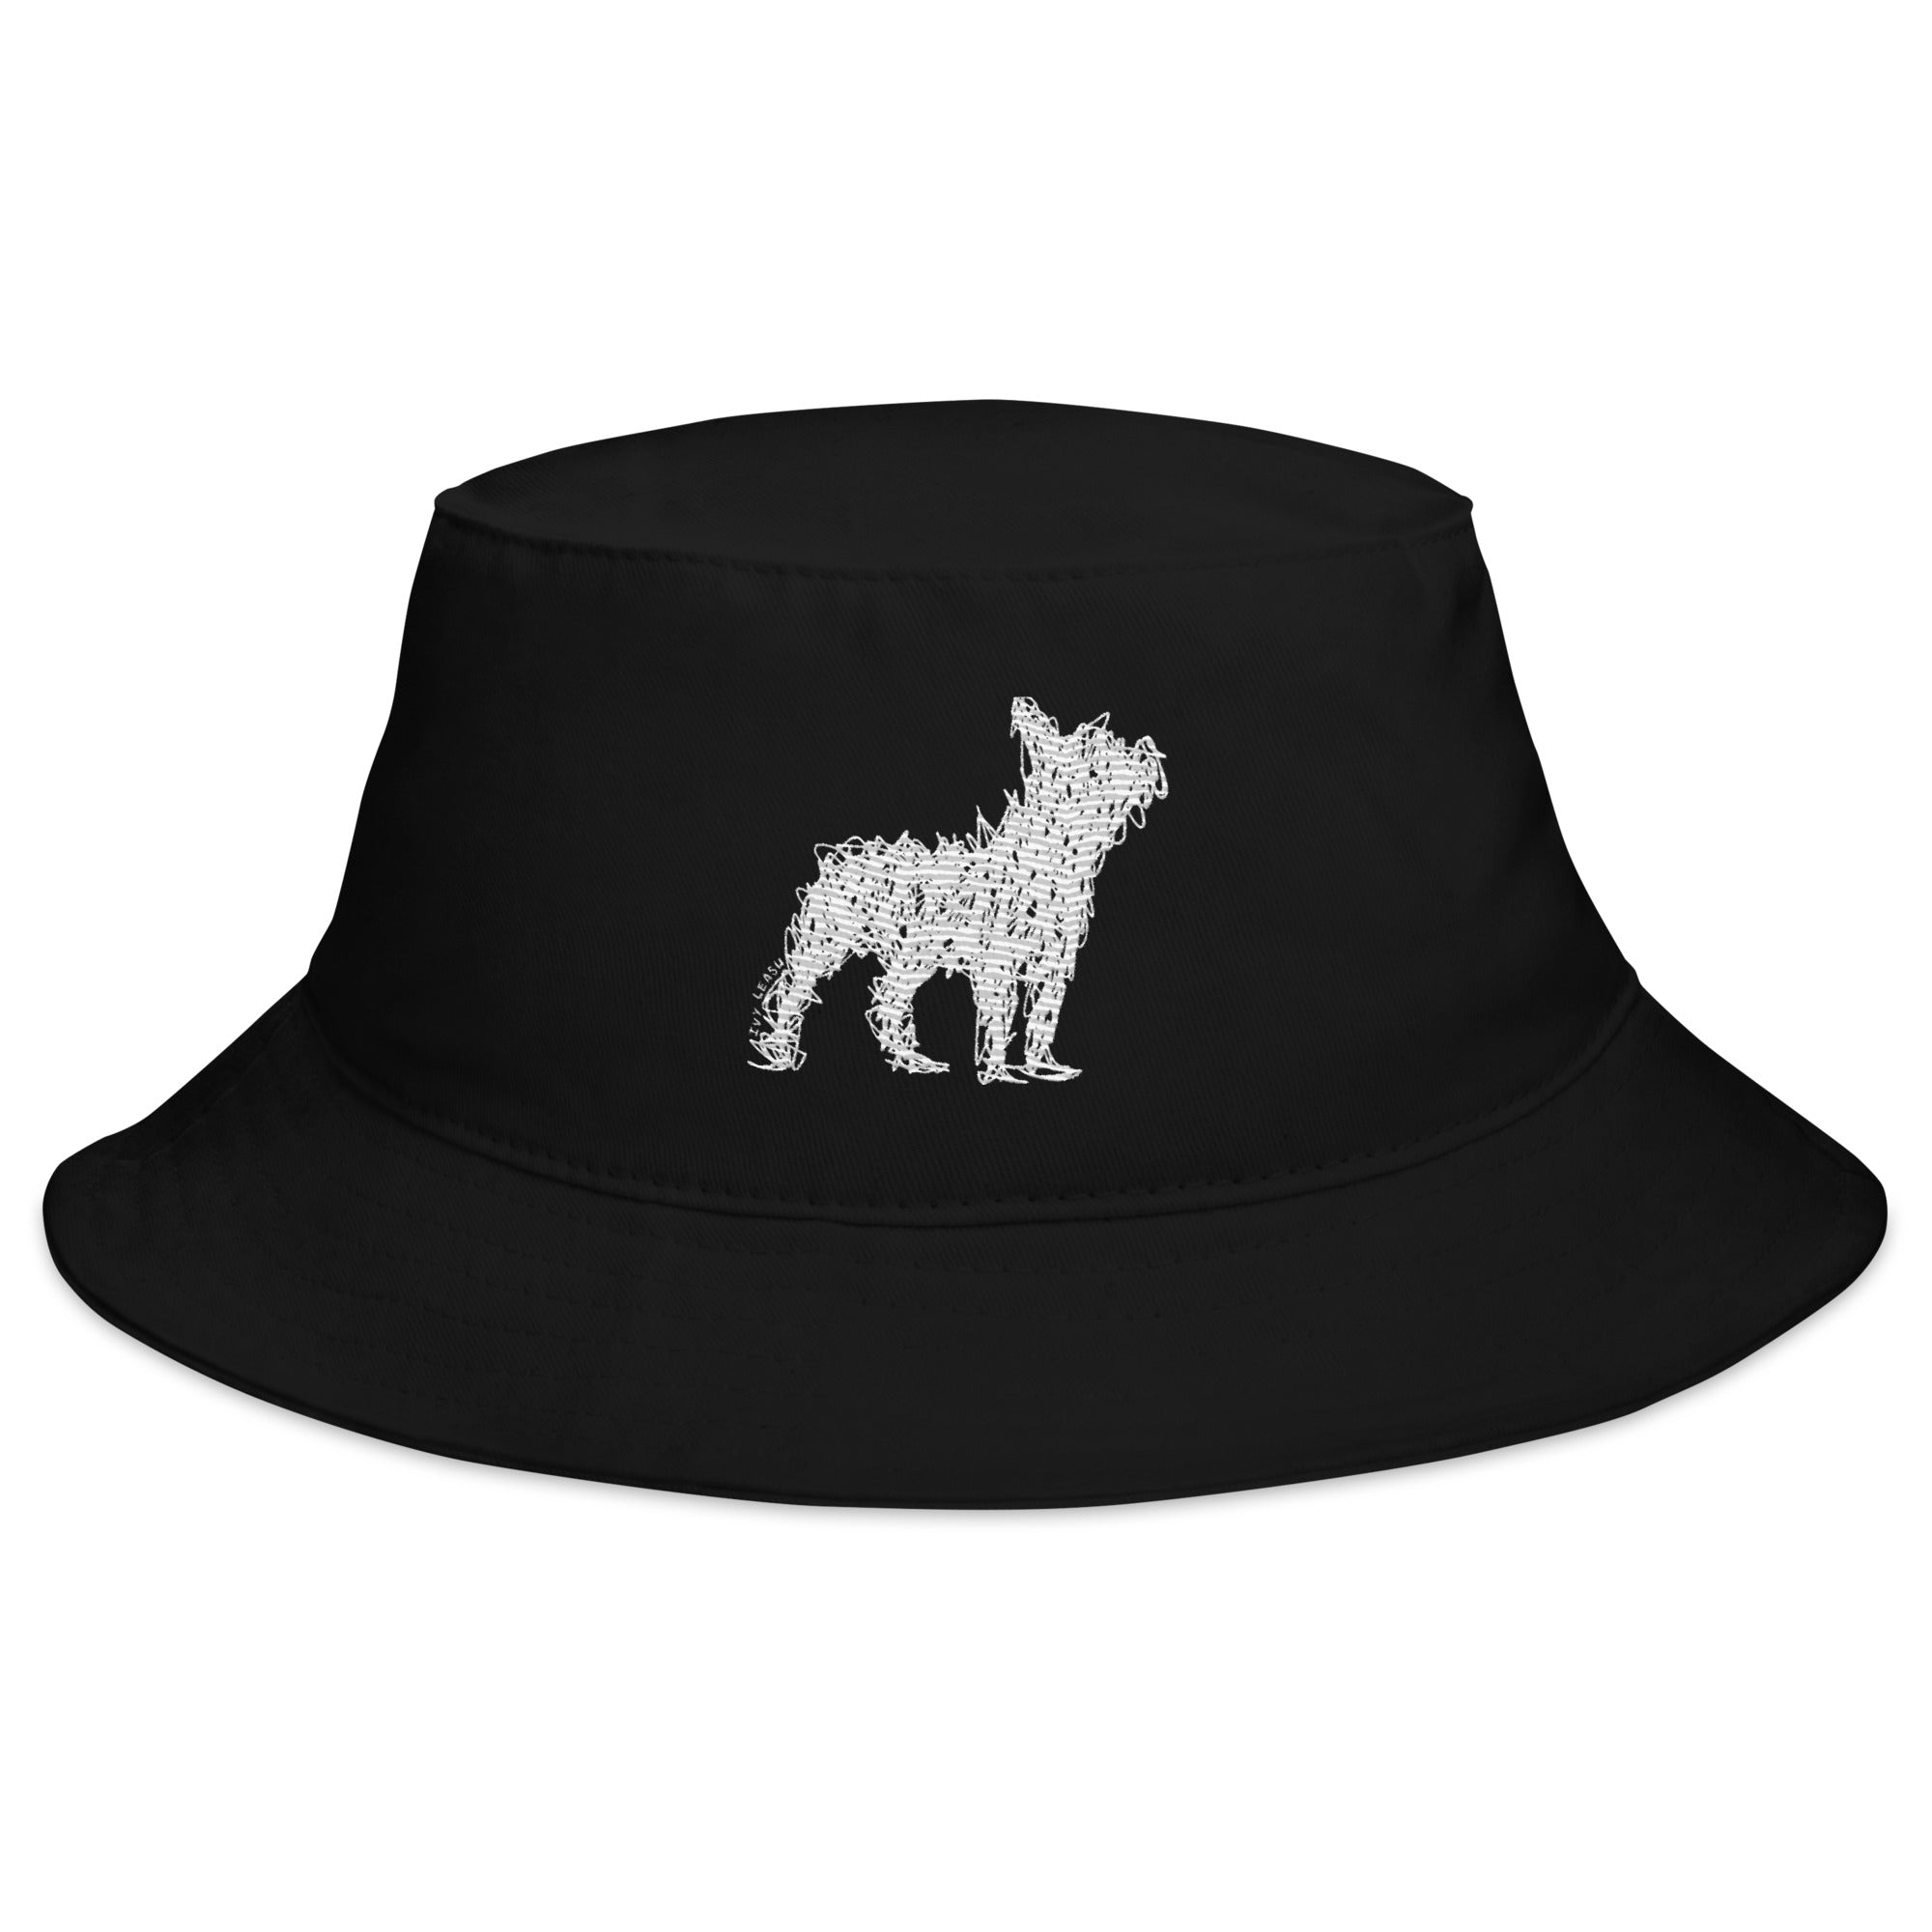 French Bulldogg Bucket Hat - Accessories